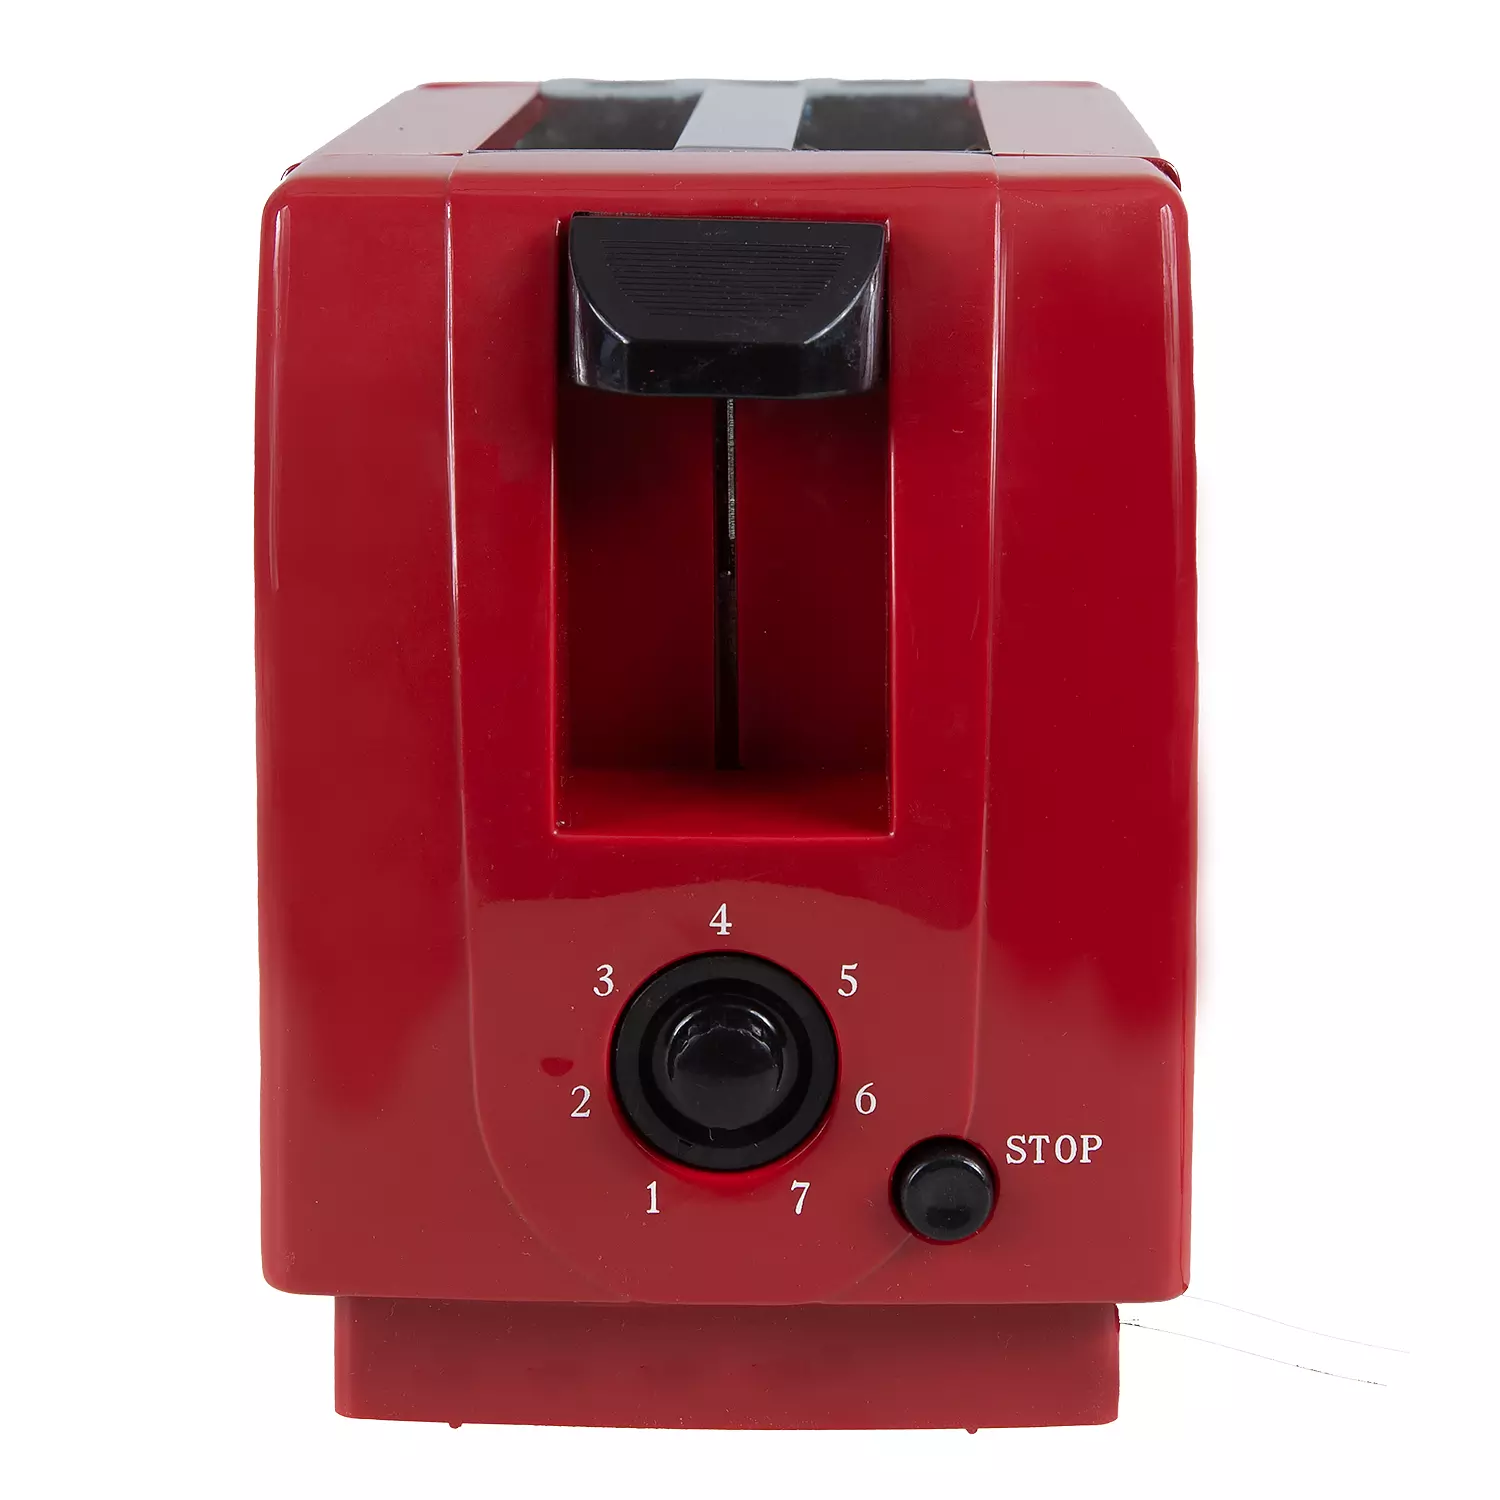 Hauz Basics - 2 slice toaster, red